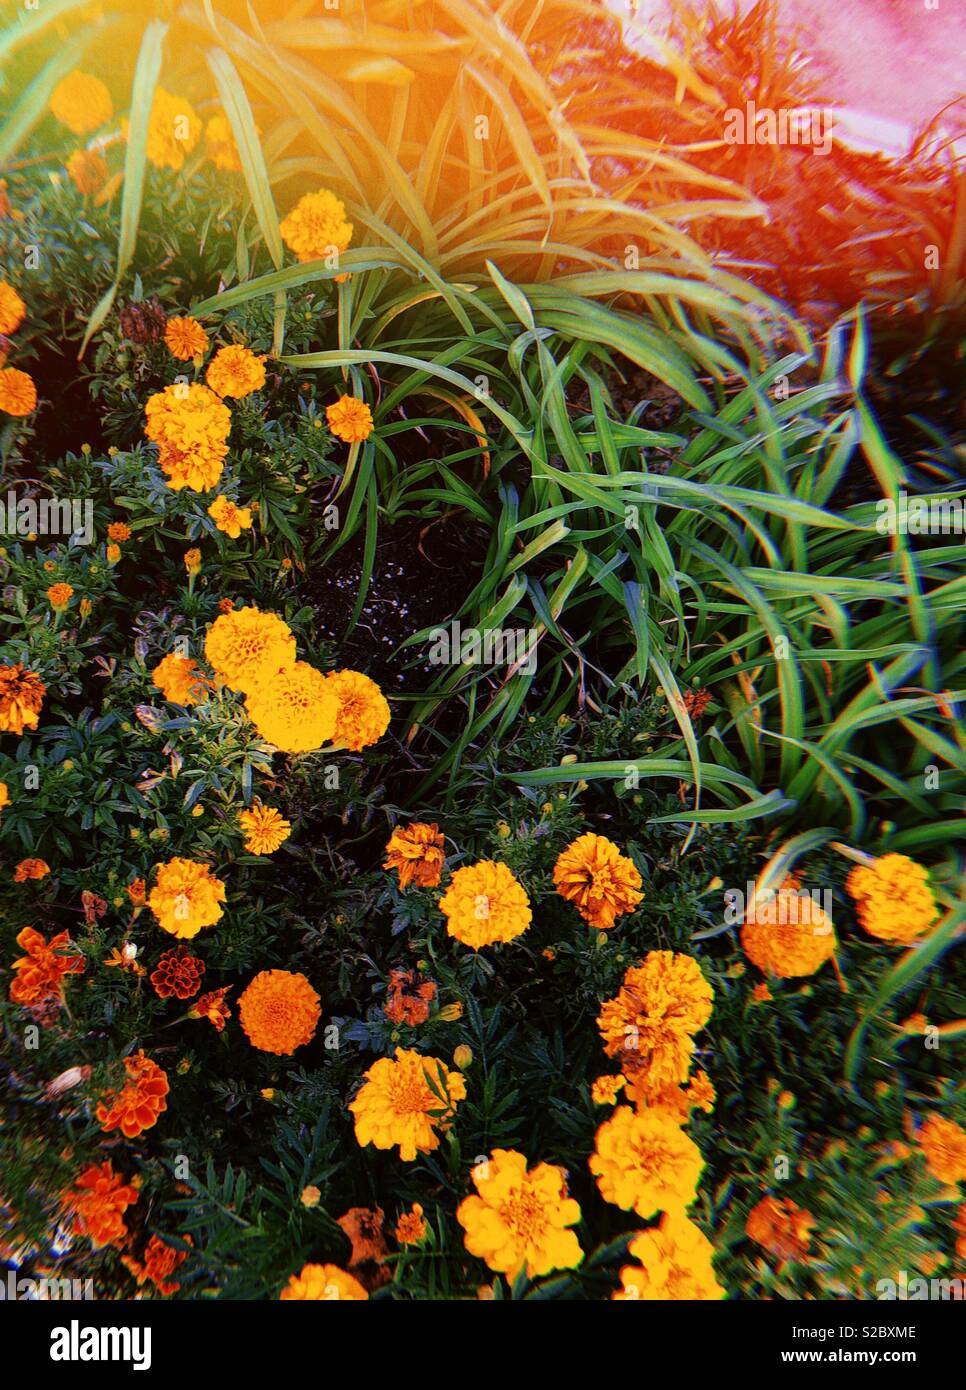 Pretty flowers Stock Photo